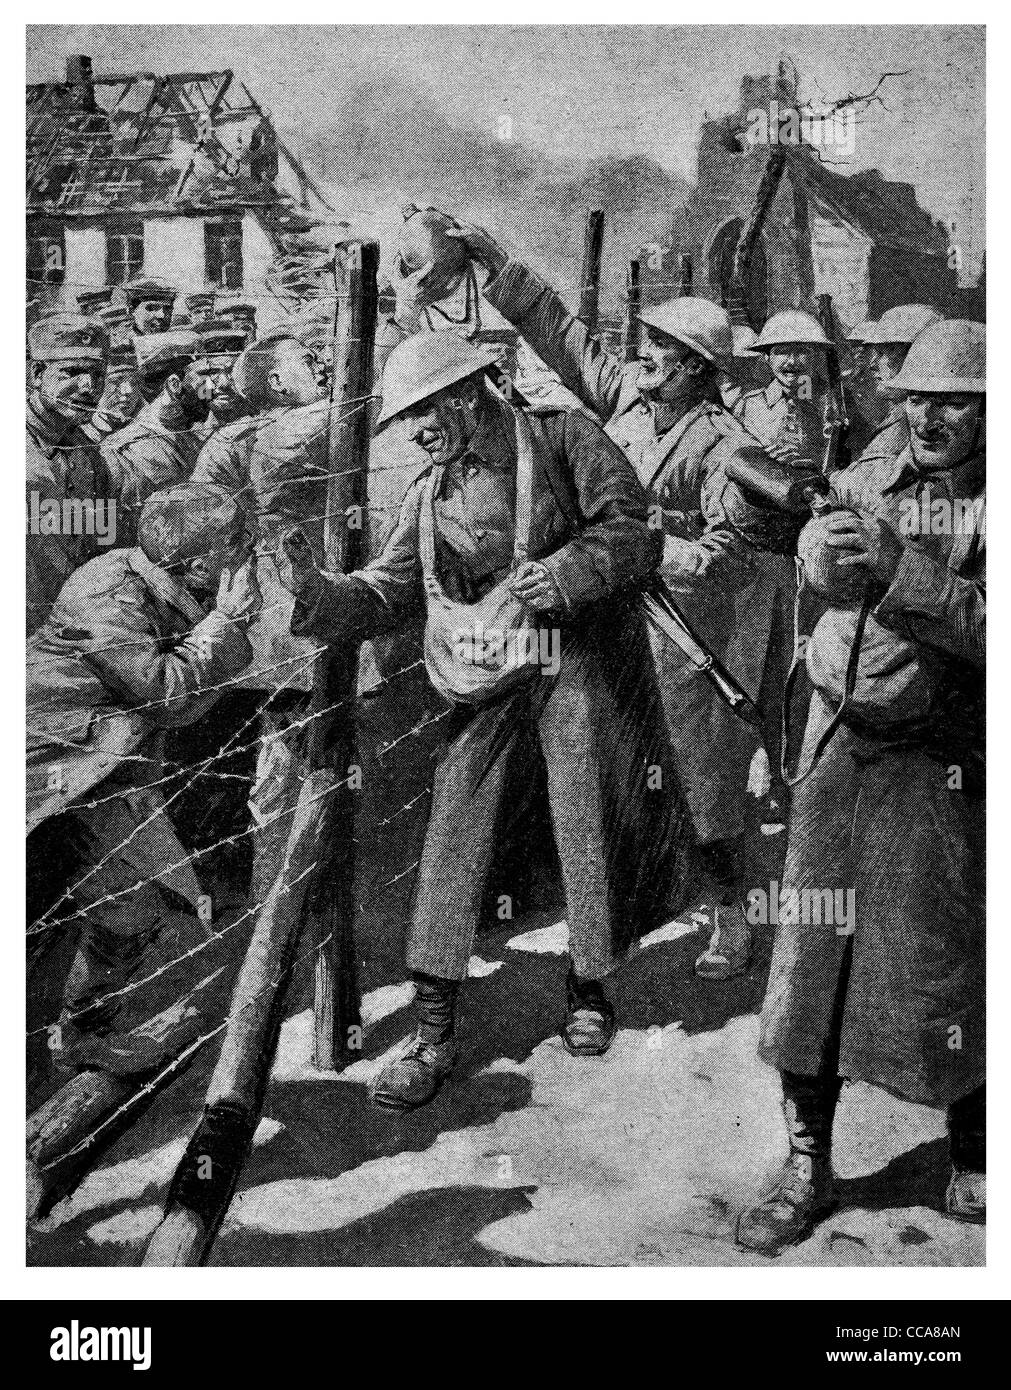 1917 German prisoners taken British Arras France prison camp barbed wire prisoner Stock Photo